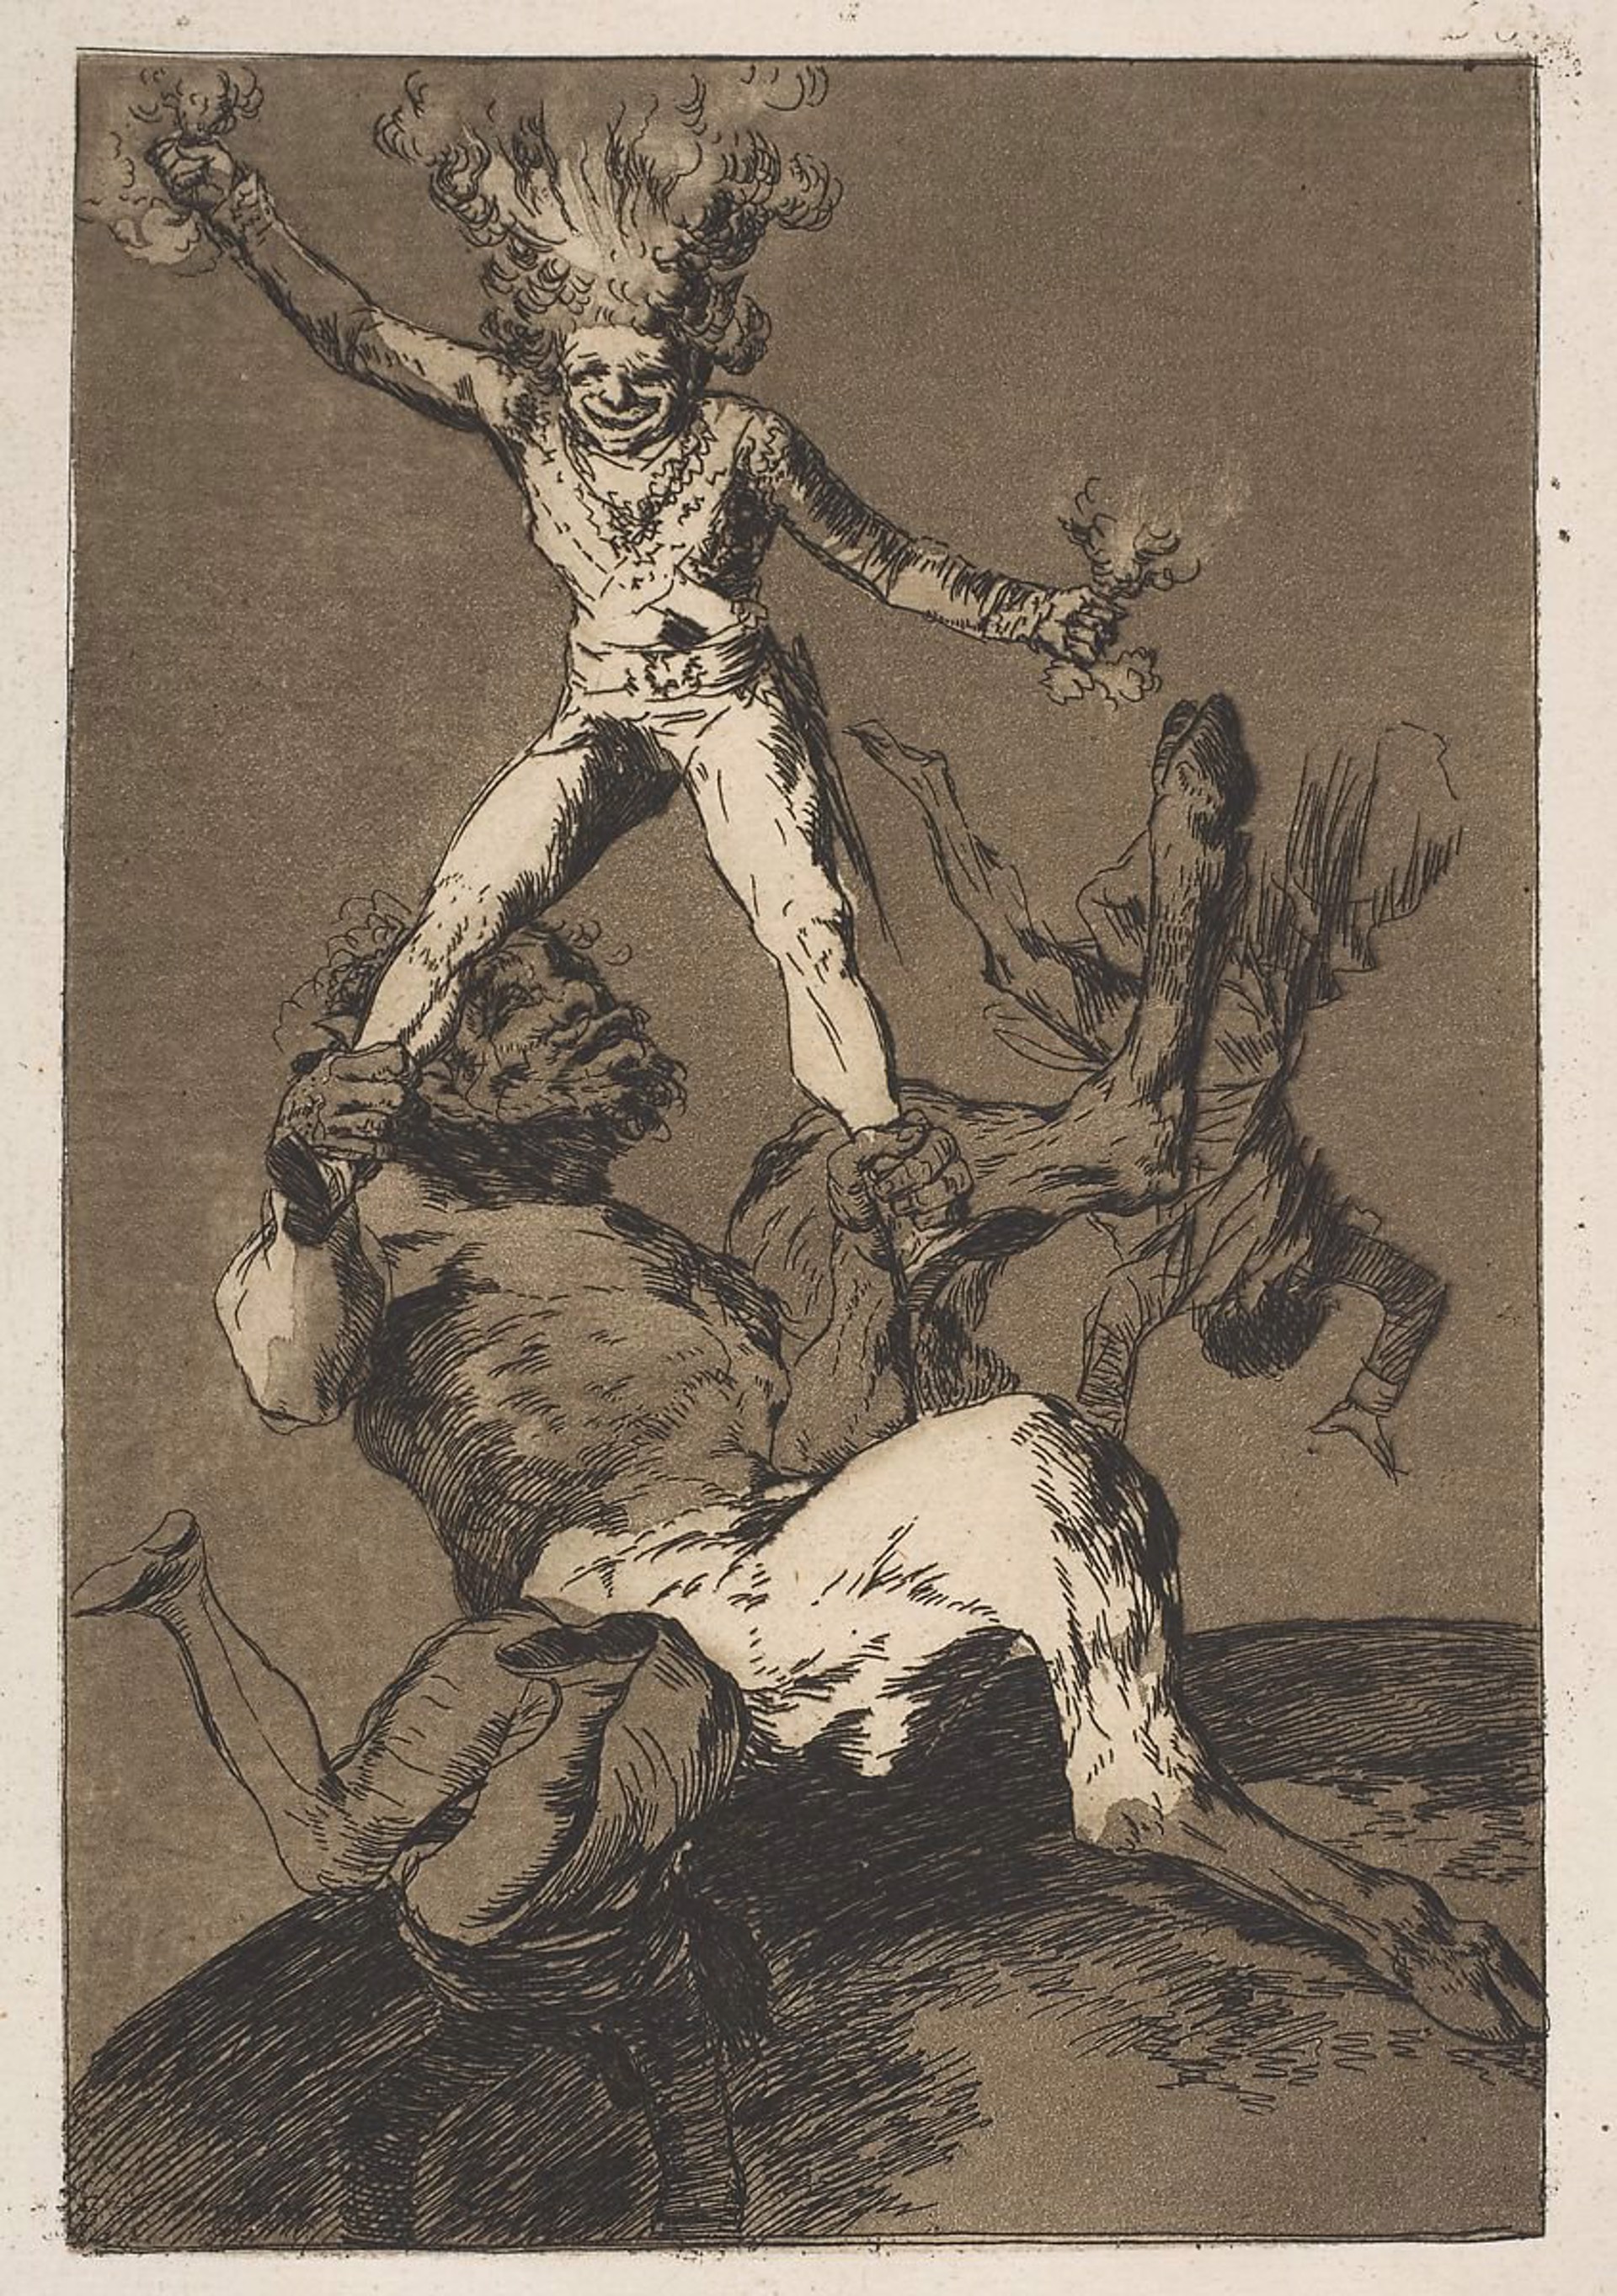 Los Caprichos: Subir y Bajar (To Rise and To Fall) by Francisco Goya